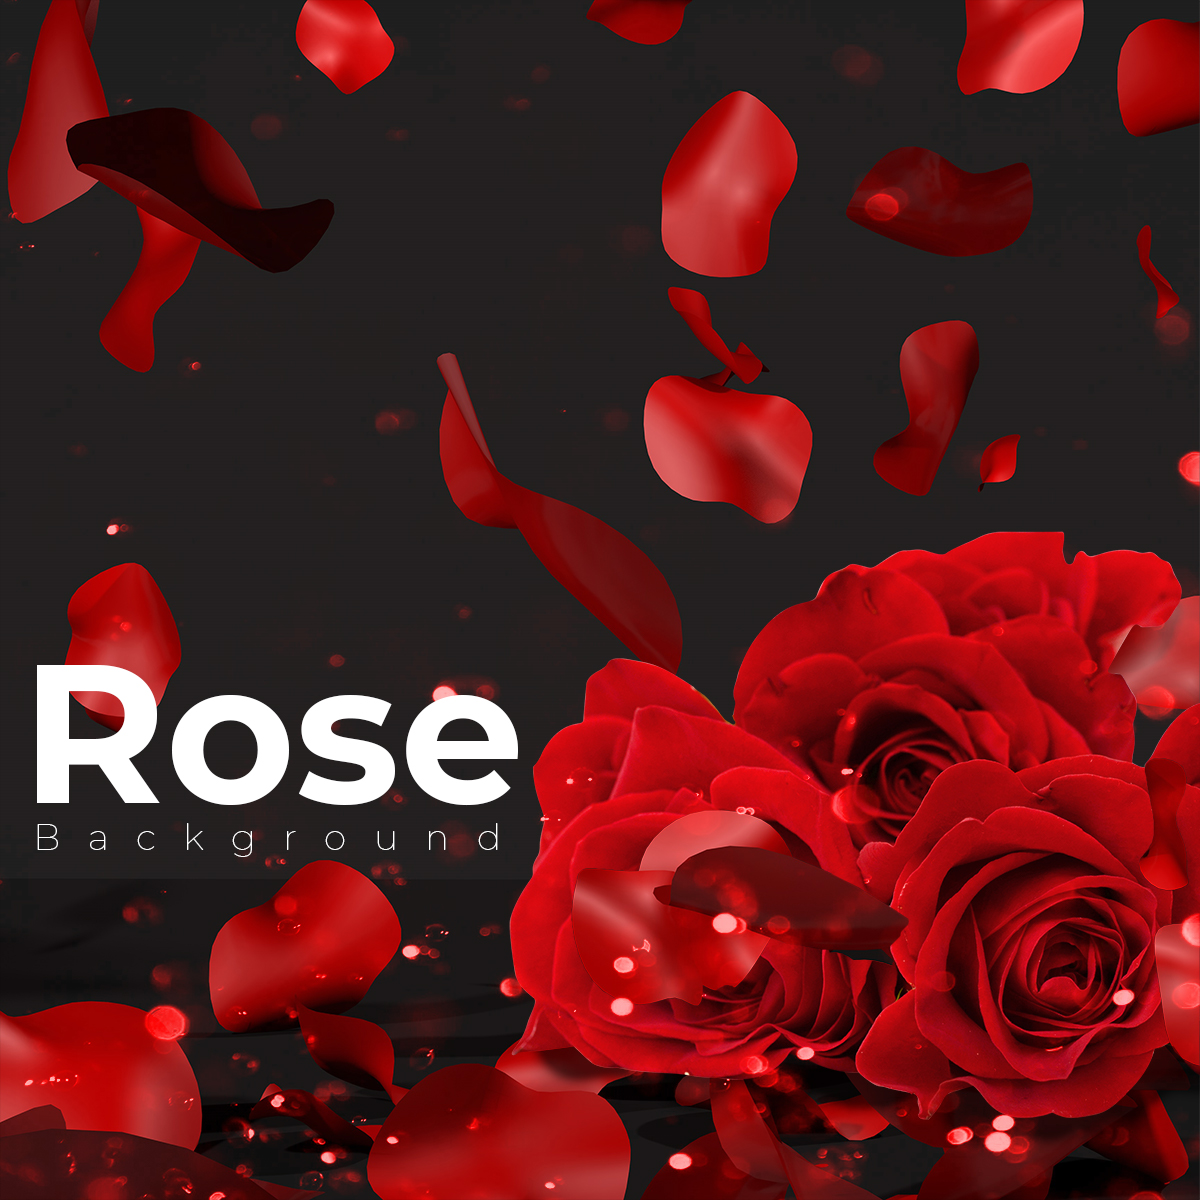 Beautiful Rose background 3D render Stock image